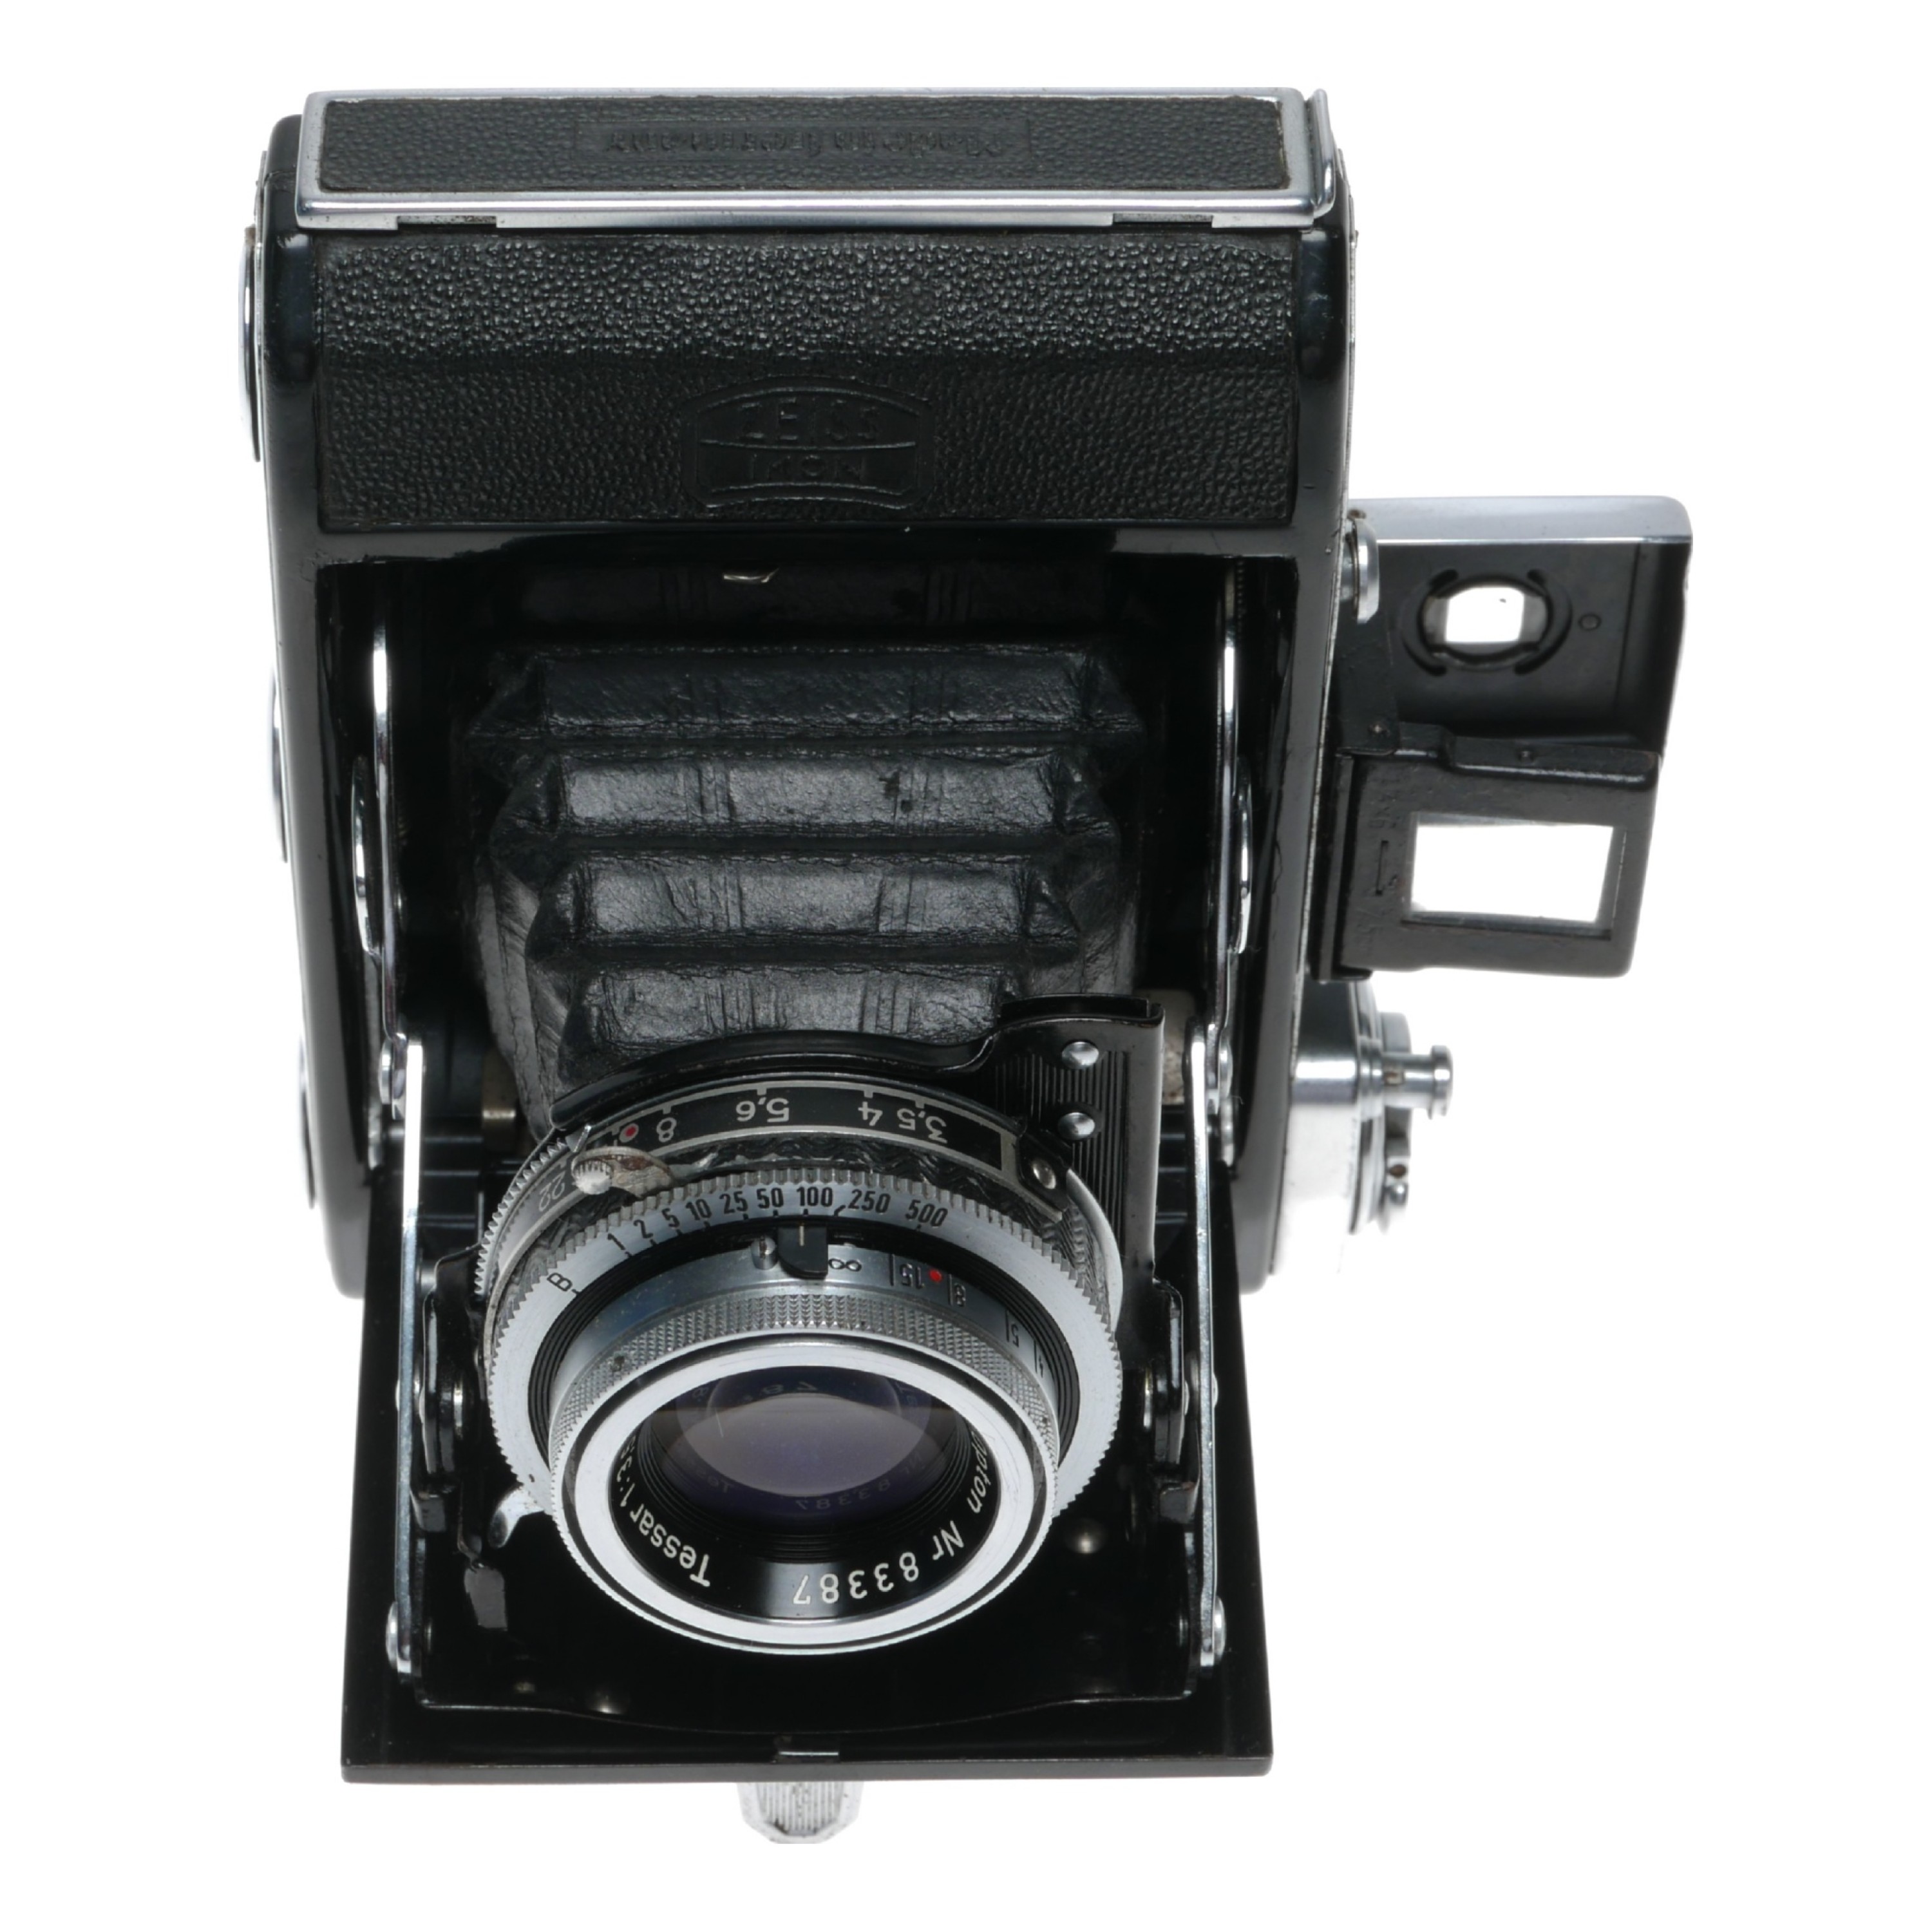 Zeiss Ikon Ikonta A 521 Vertical Folding Camera Opton Tessar 1:3.5 fu003d75mm